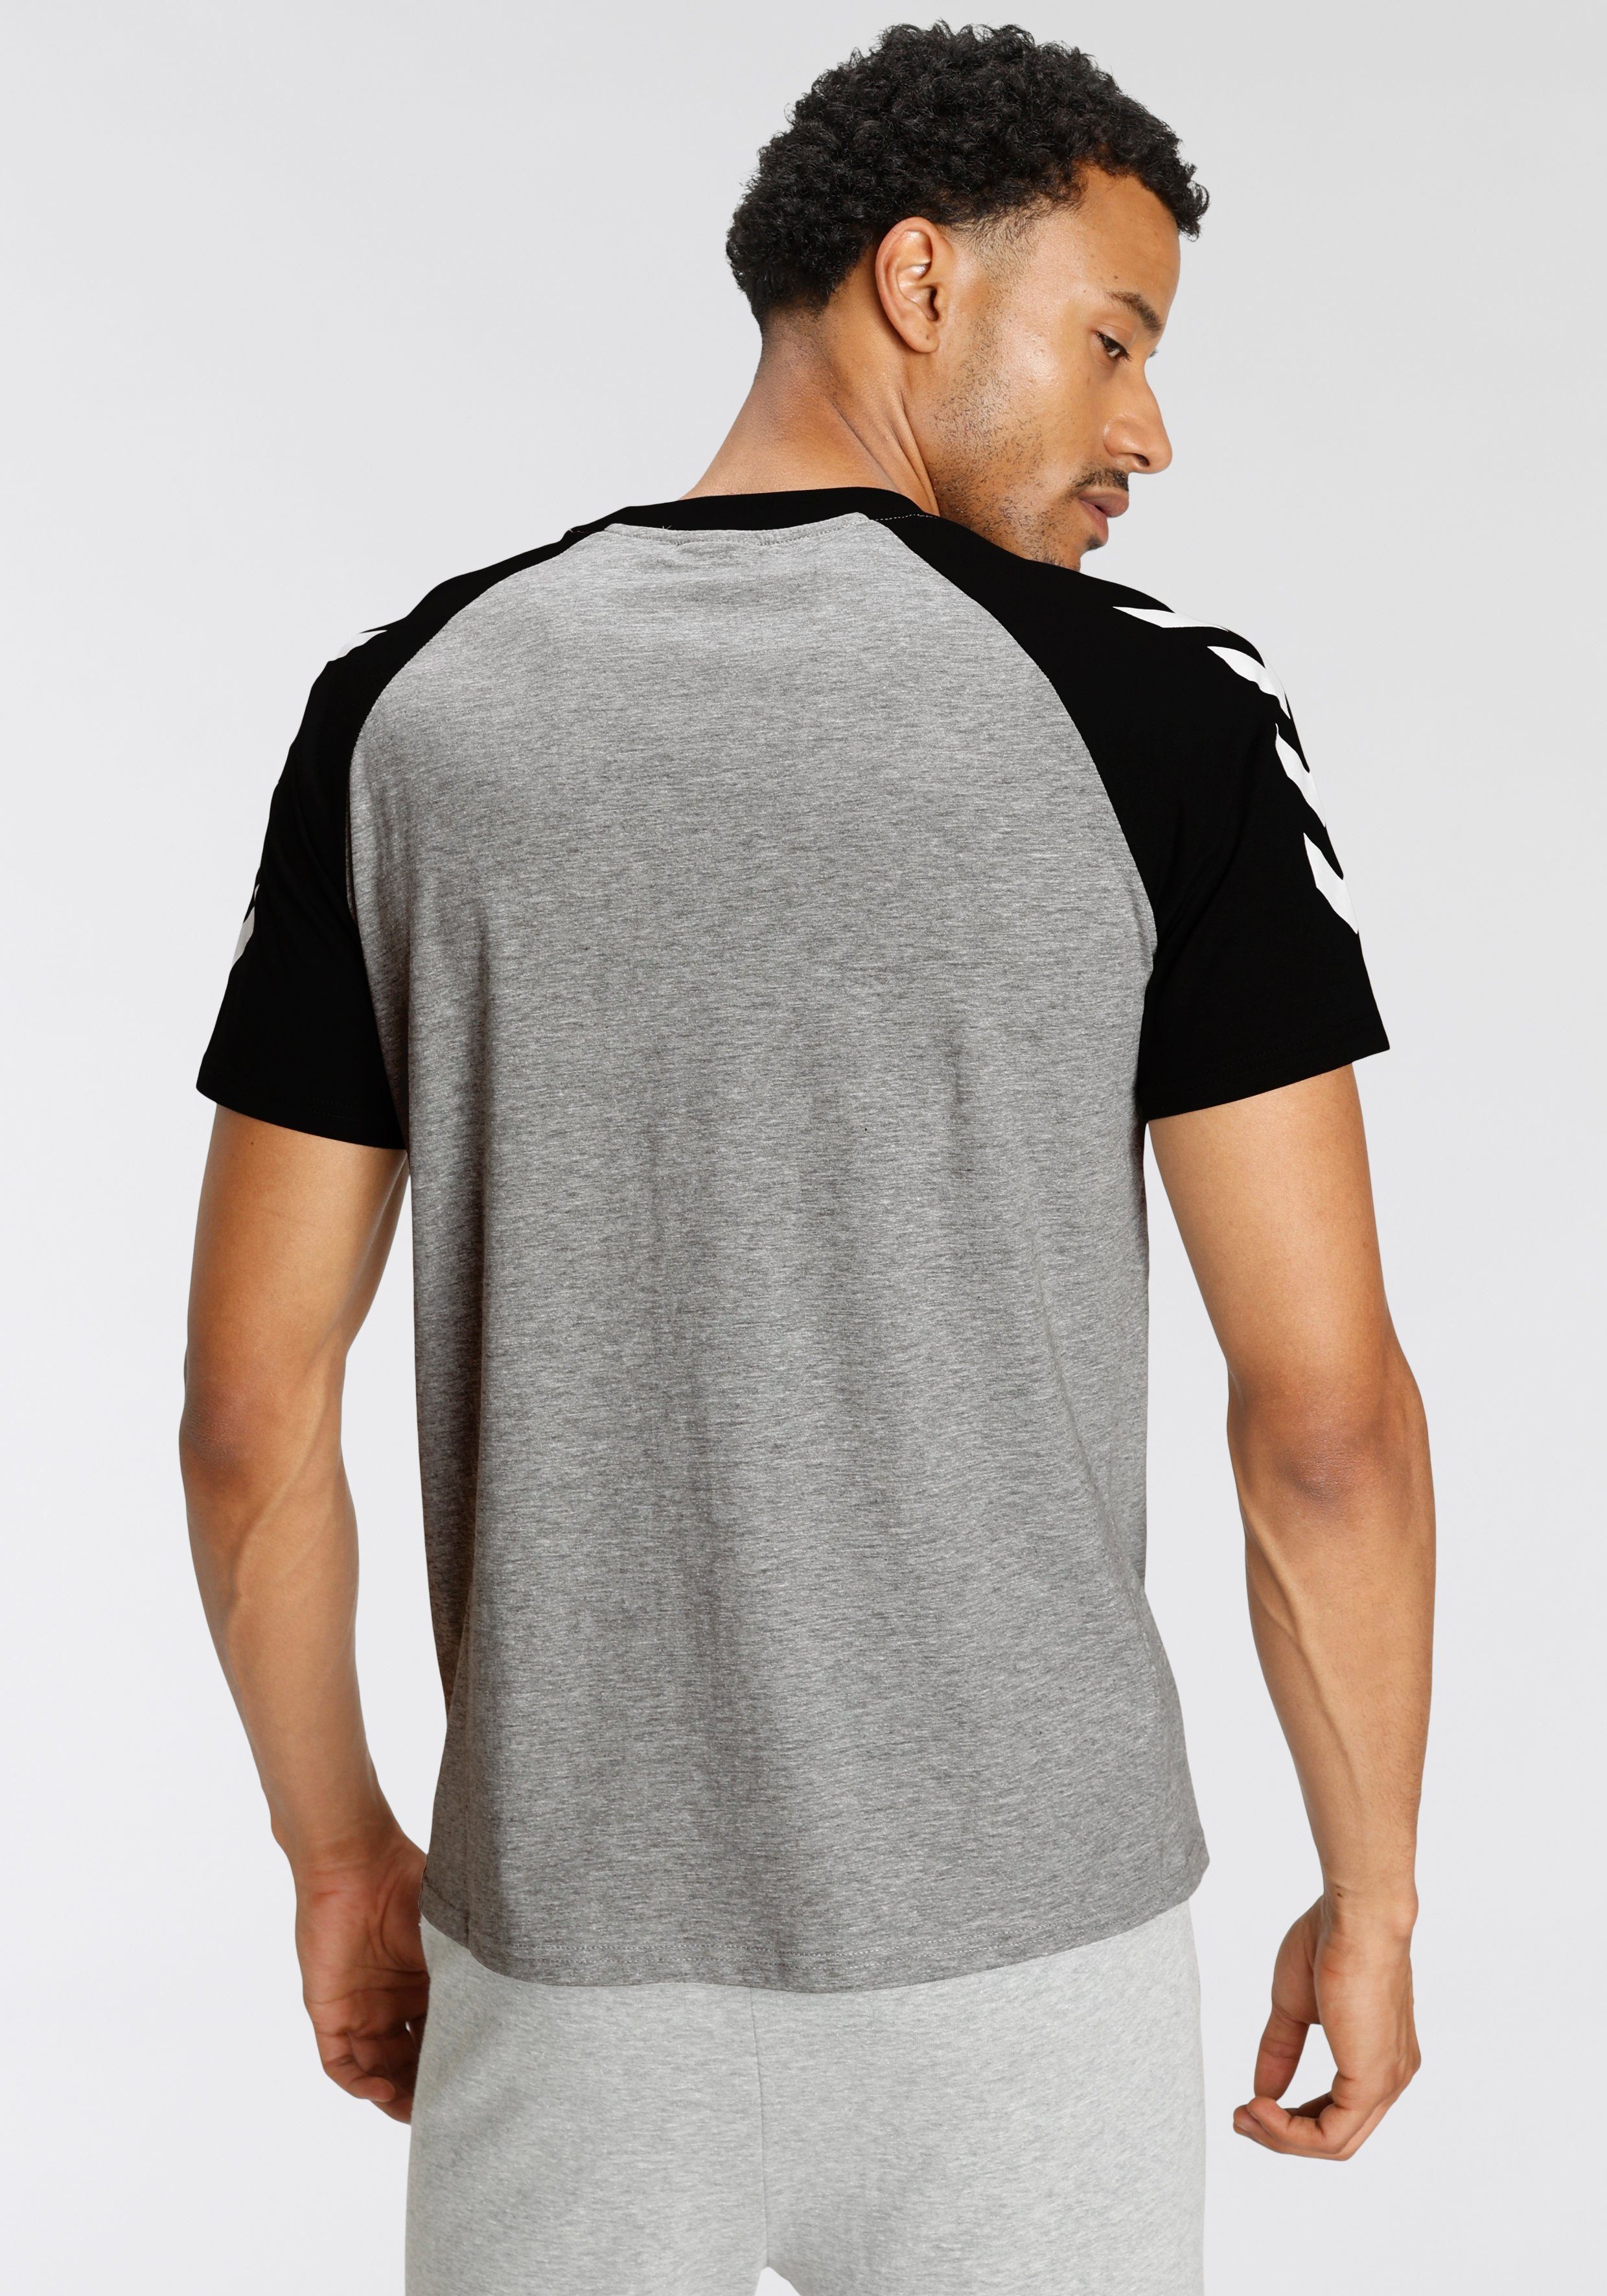 grau-schwarz T-Shirt hummel